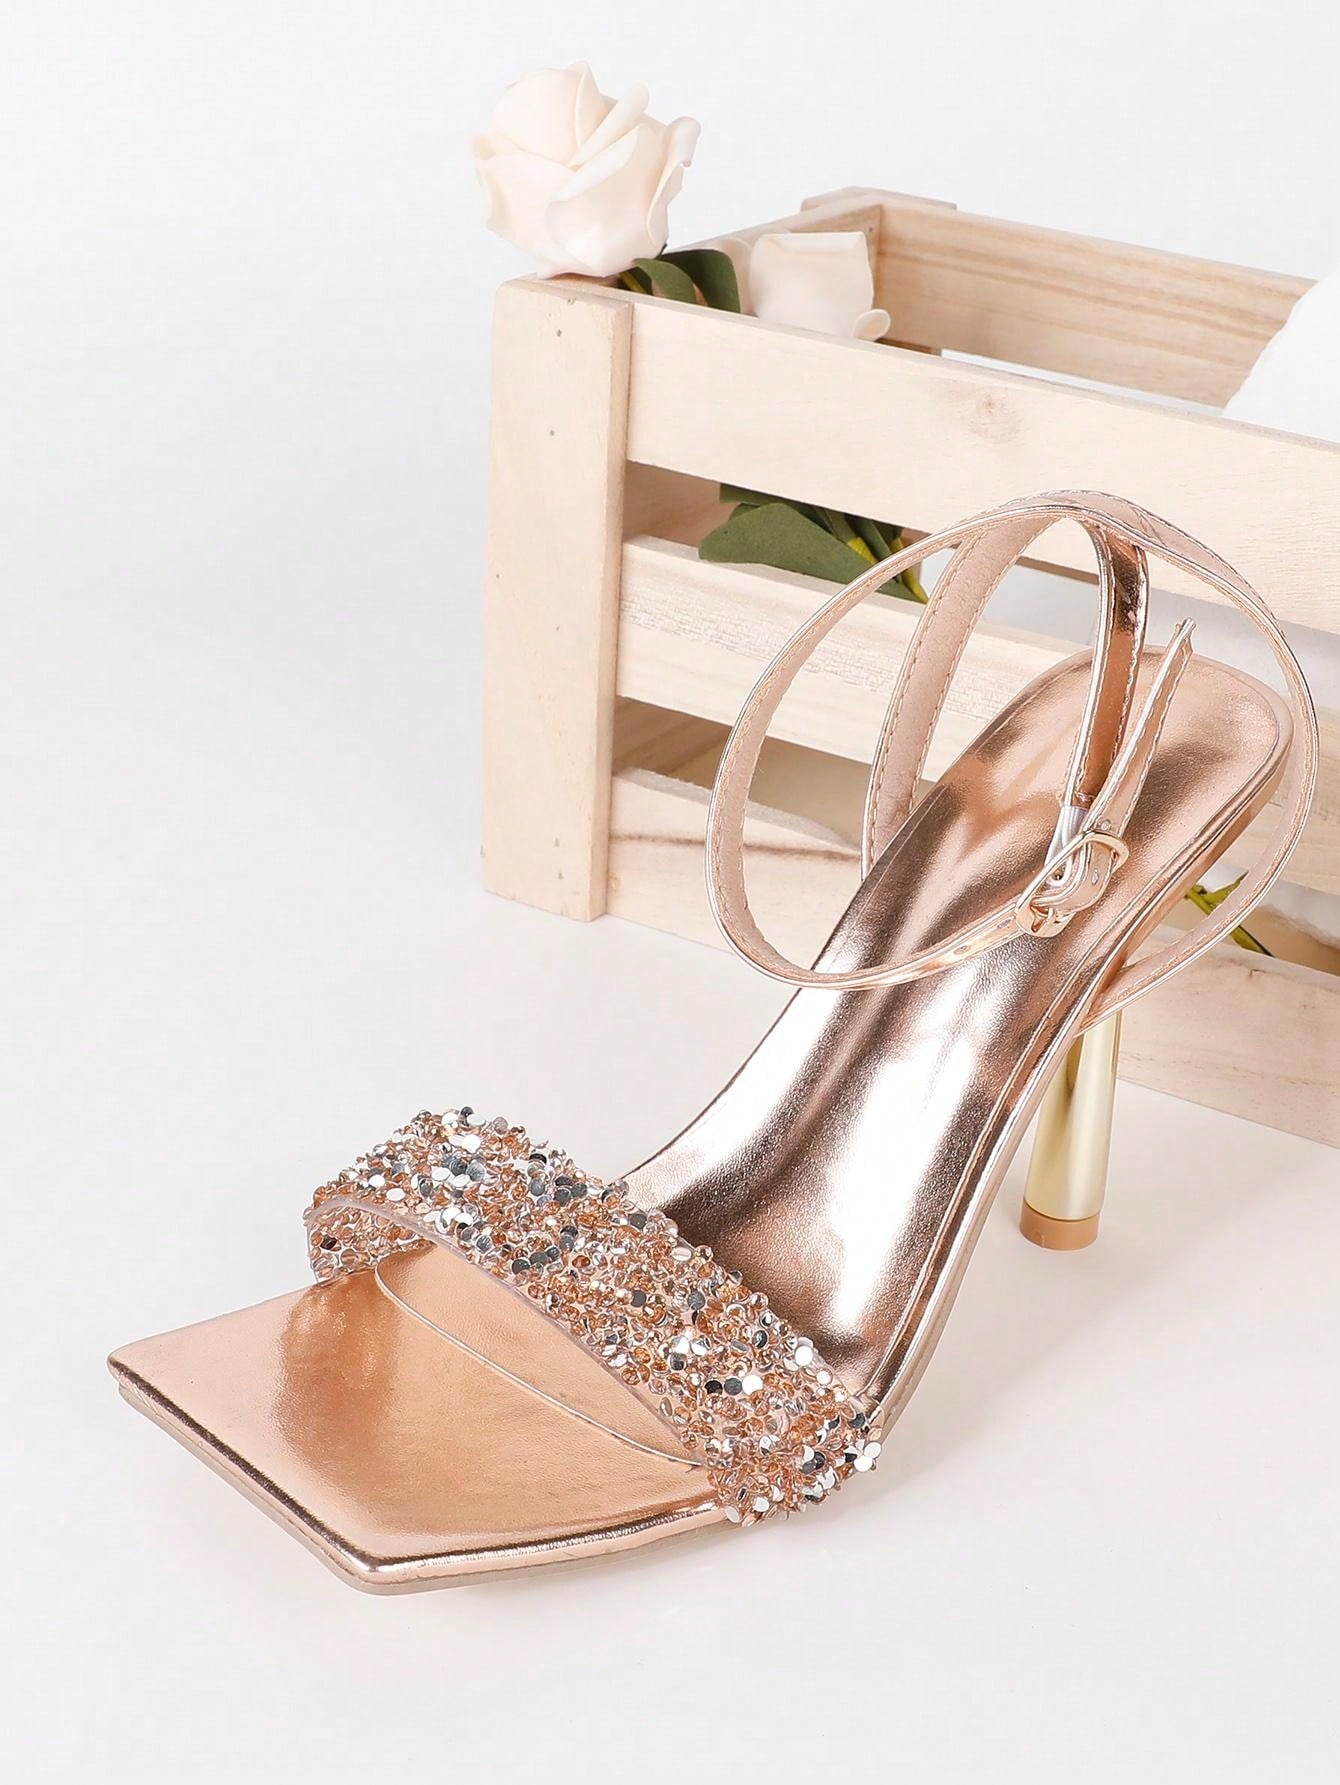 Fashionable High Heel Women's Sandals With Sparkling Rhinestone Decoration